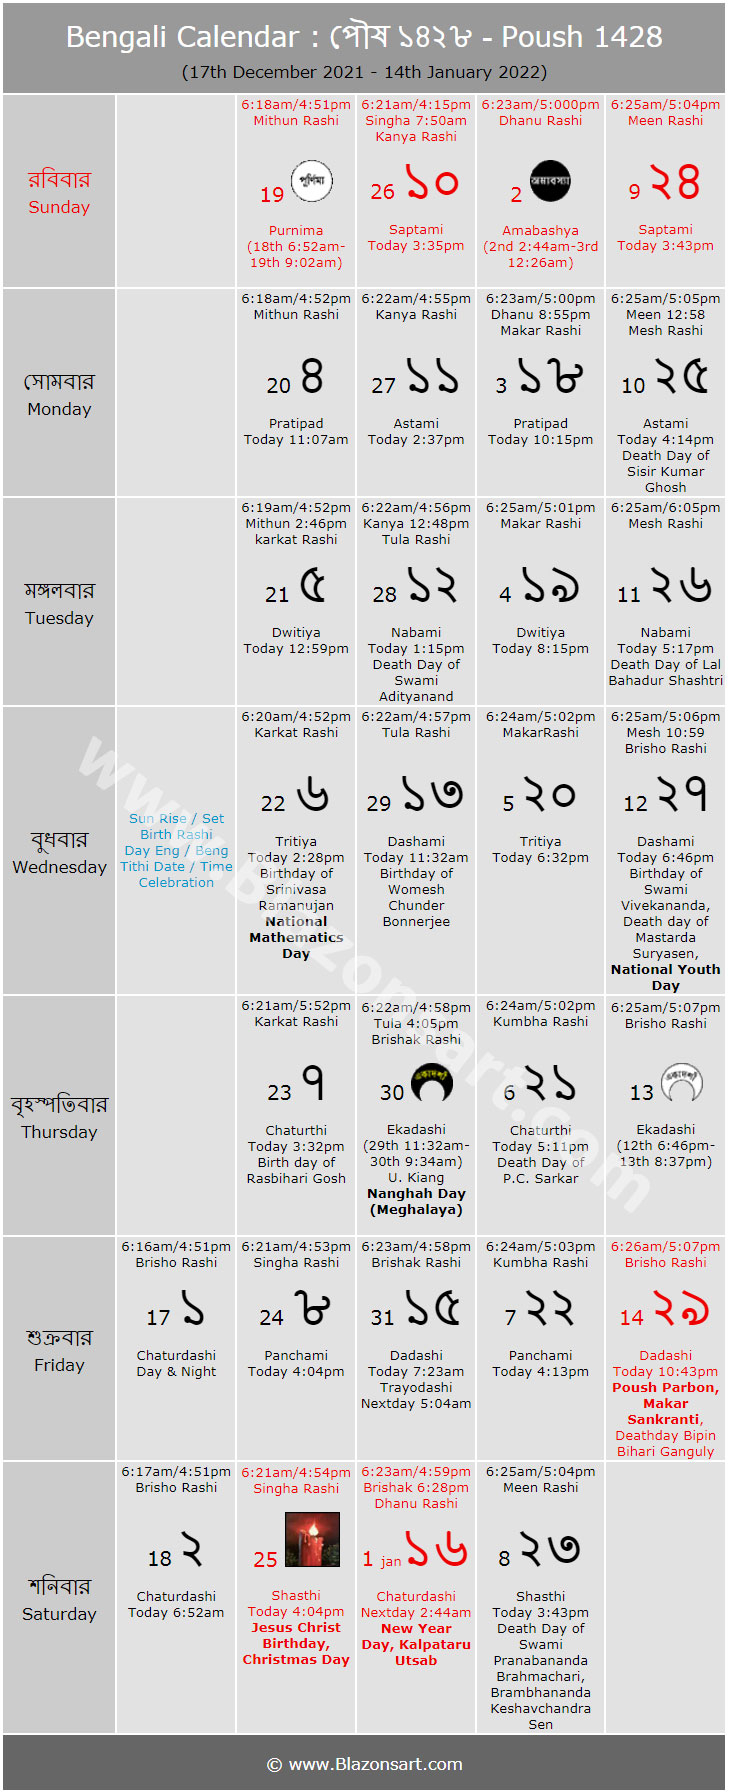 Bengali Calendar - Poush 1428 : বাংলা কালেন্ডার - পৌষ ১৪২৮ (17Th December 2021 - 14Th January 2022)